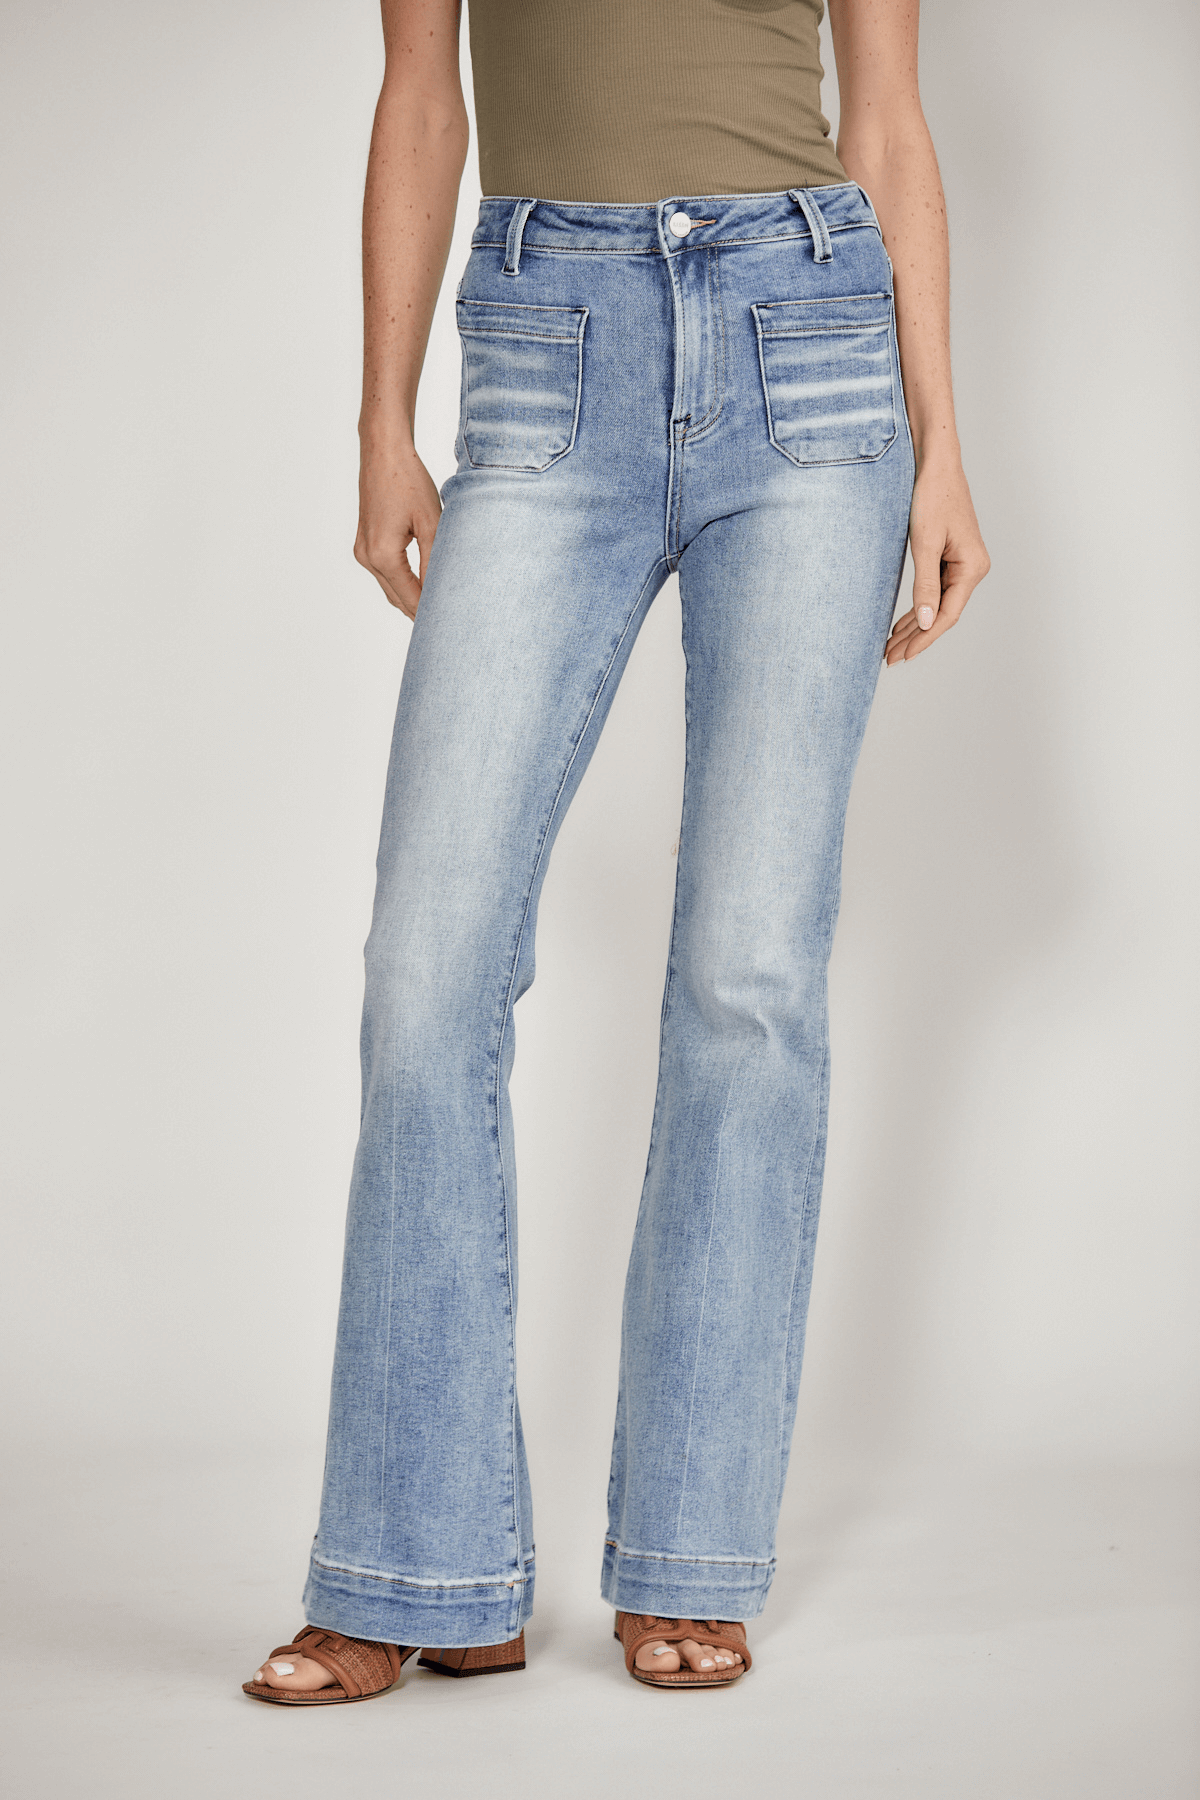 Risen Sedona Patch Pocket Jeans